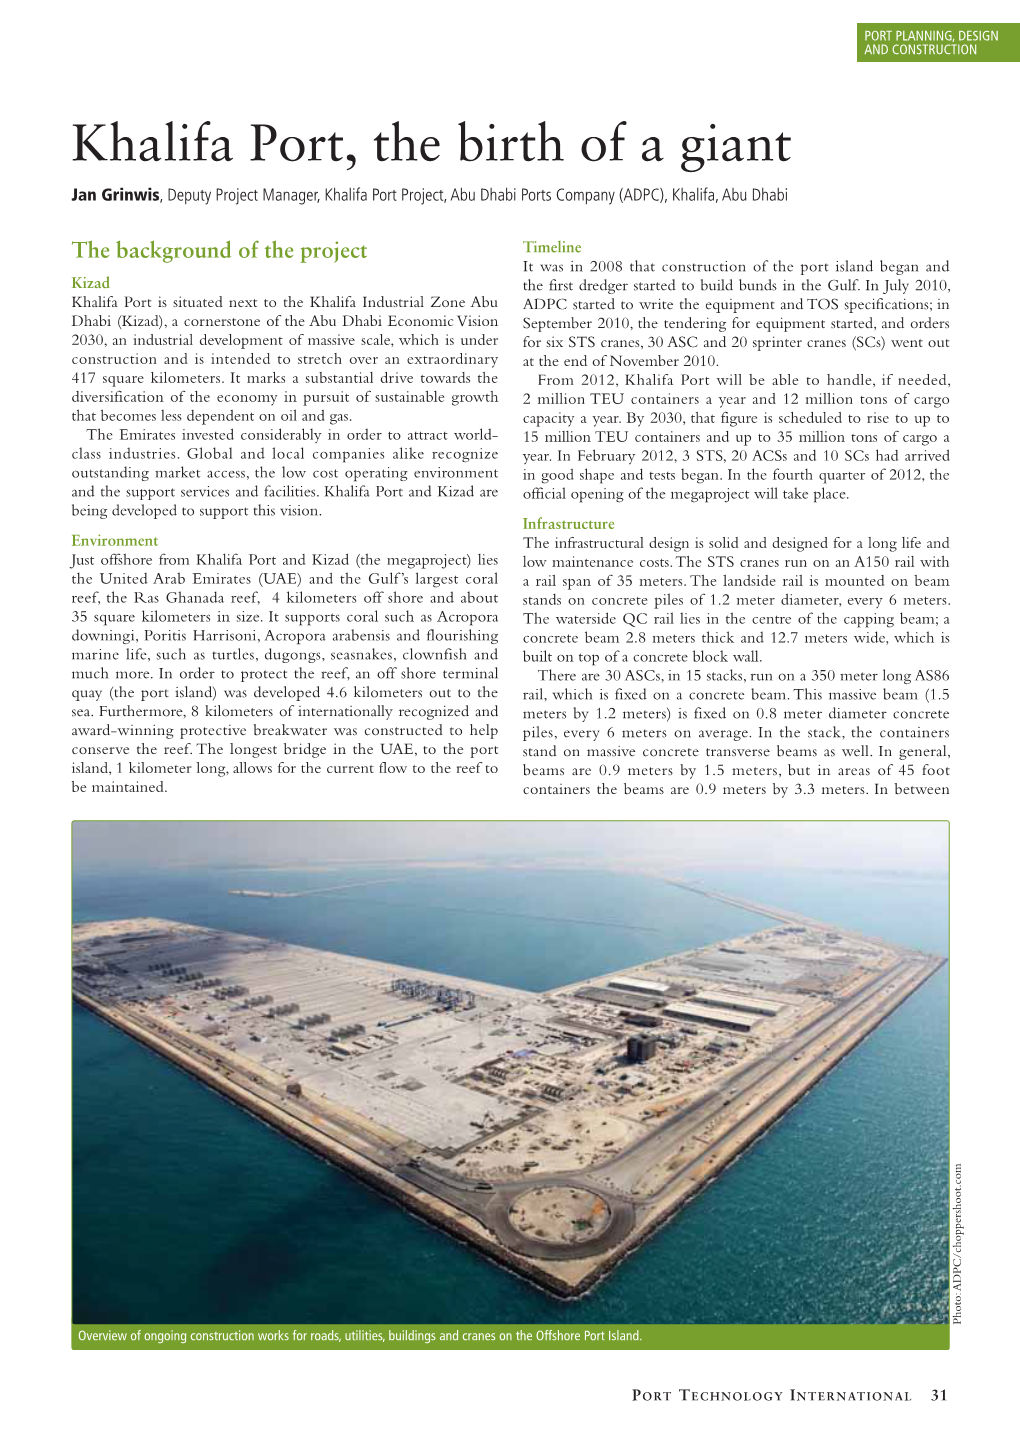 Khalifa Port, the Birth of a Giant Jan Grinwis, Deputy Project Manager, Khalifa Port Project, Abu Dhabi Ports Company (ADPC), Khalifa, Abu Dhabi